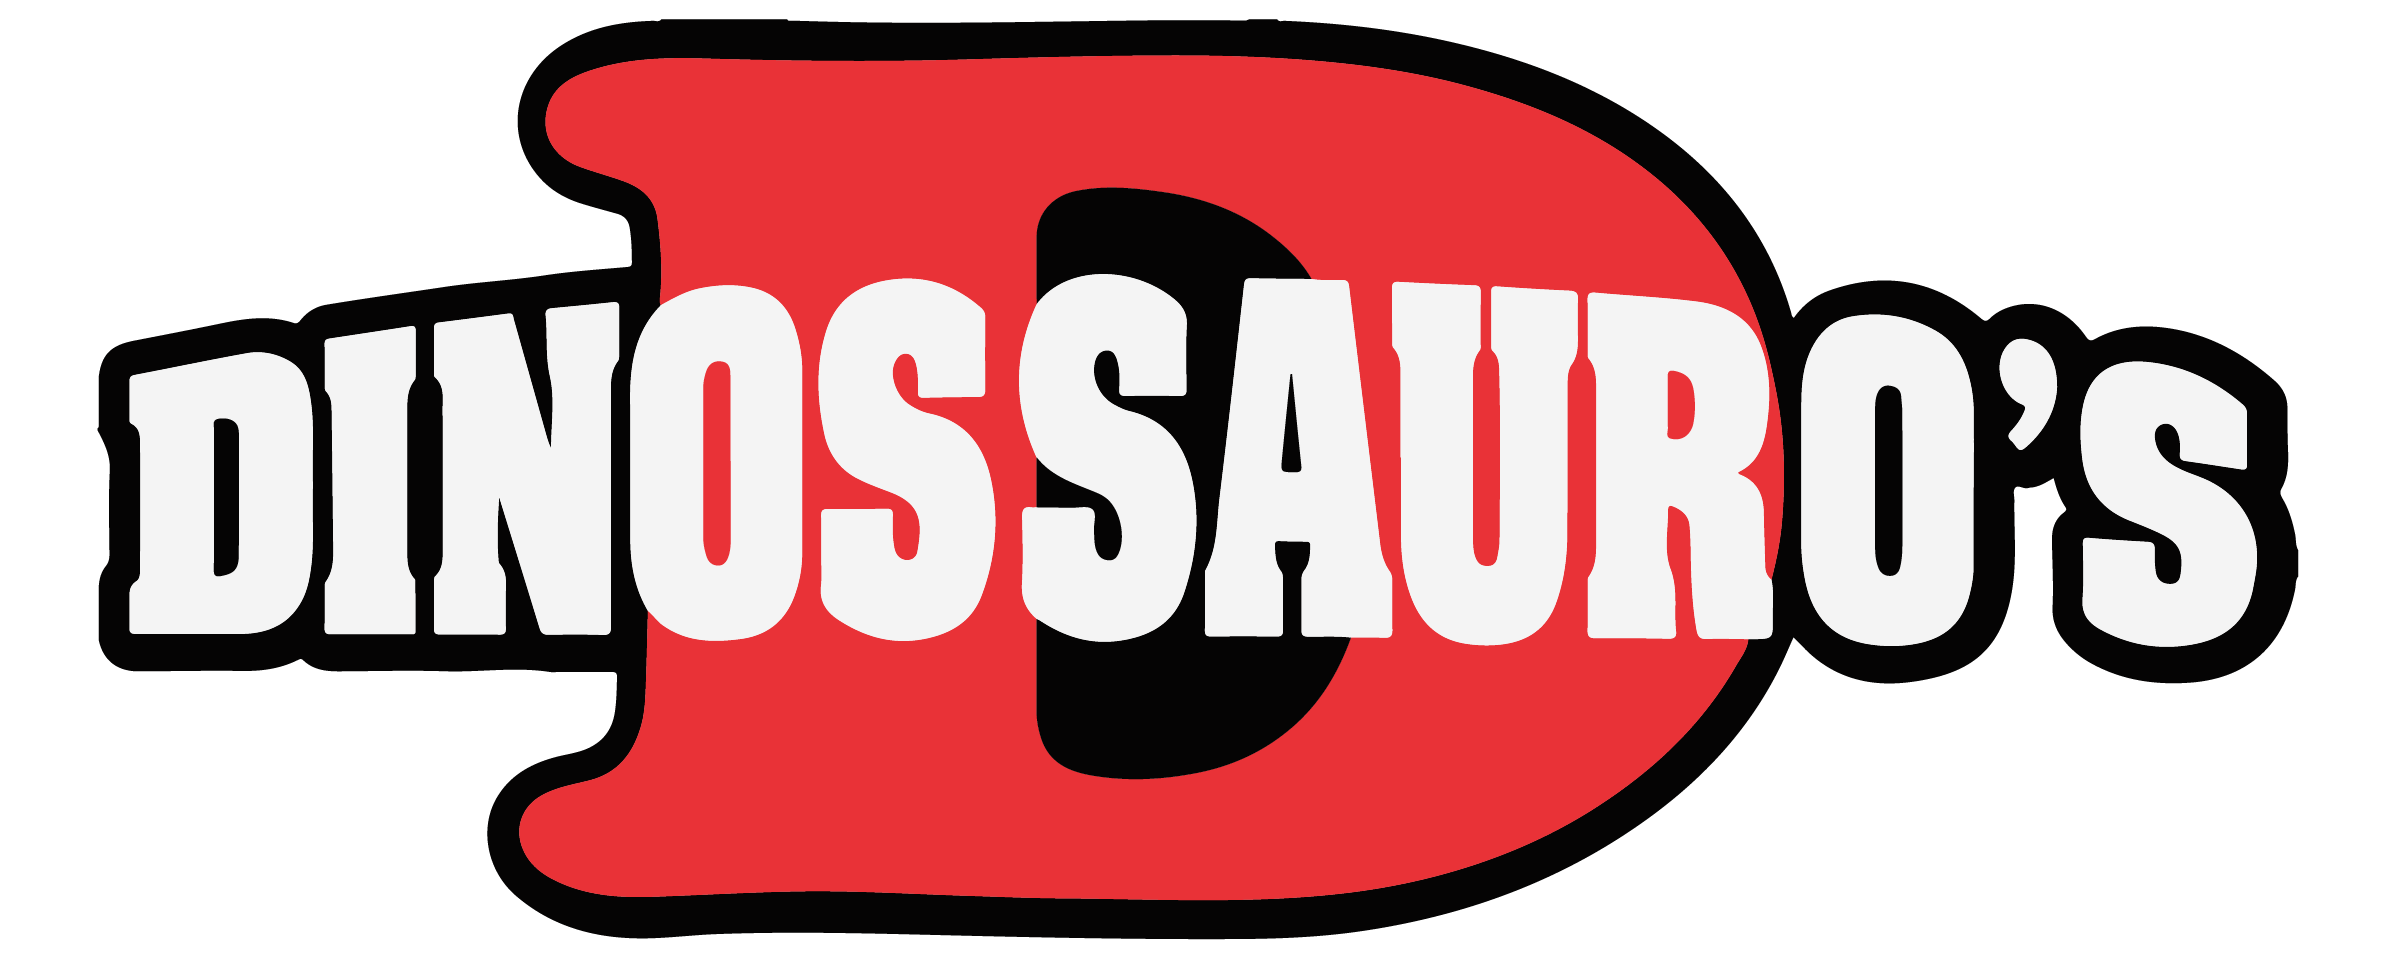 Dinossauros Uniformes